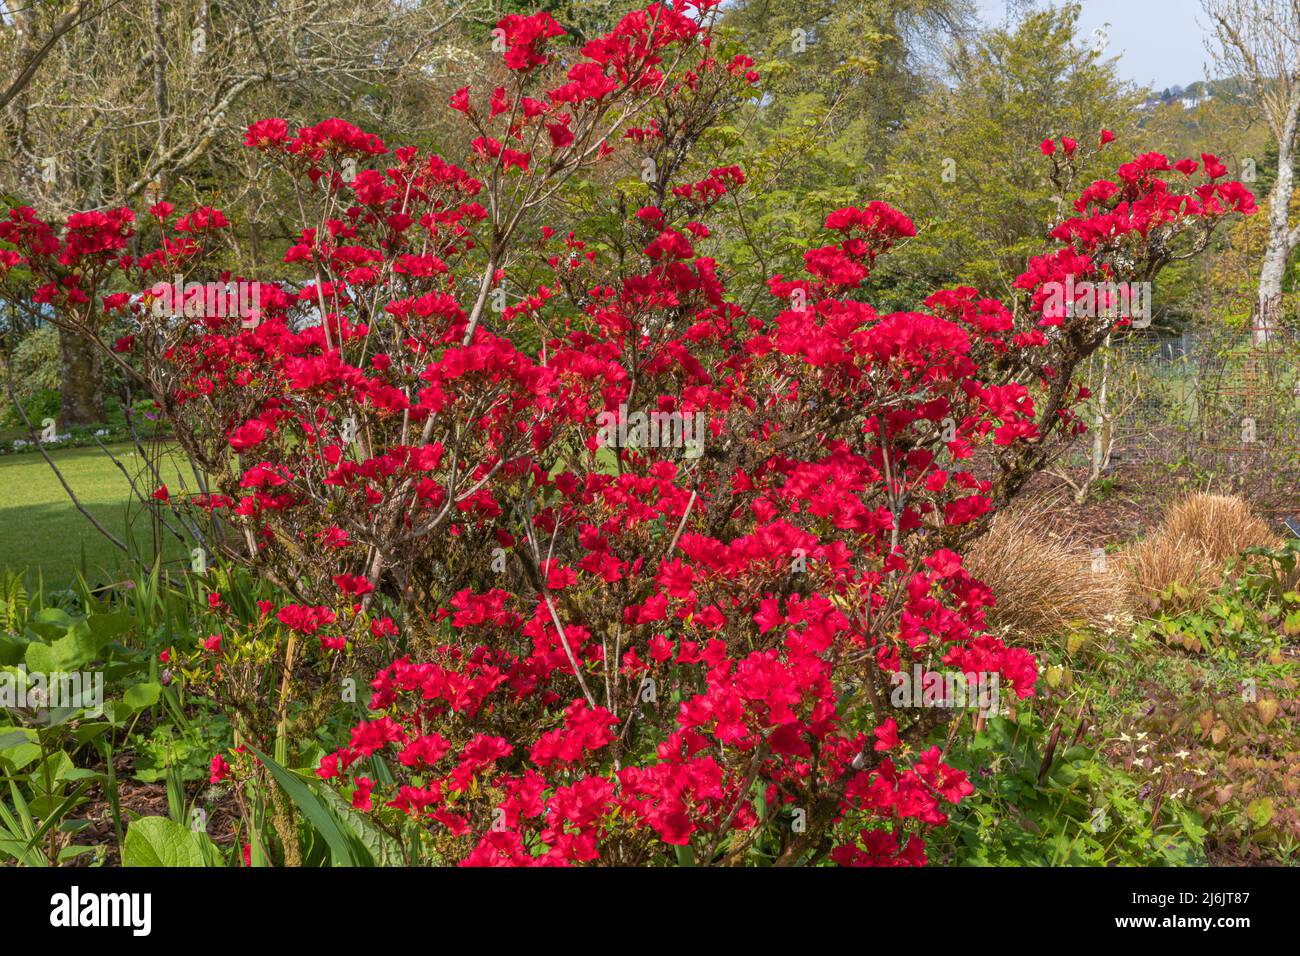 Flores rojas sangre fotografías e imágenes de alta resolución - Alamy